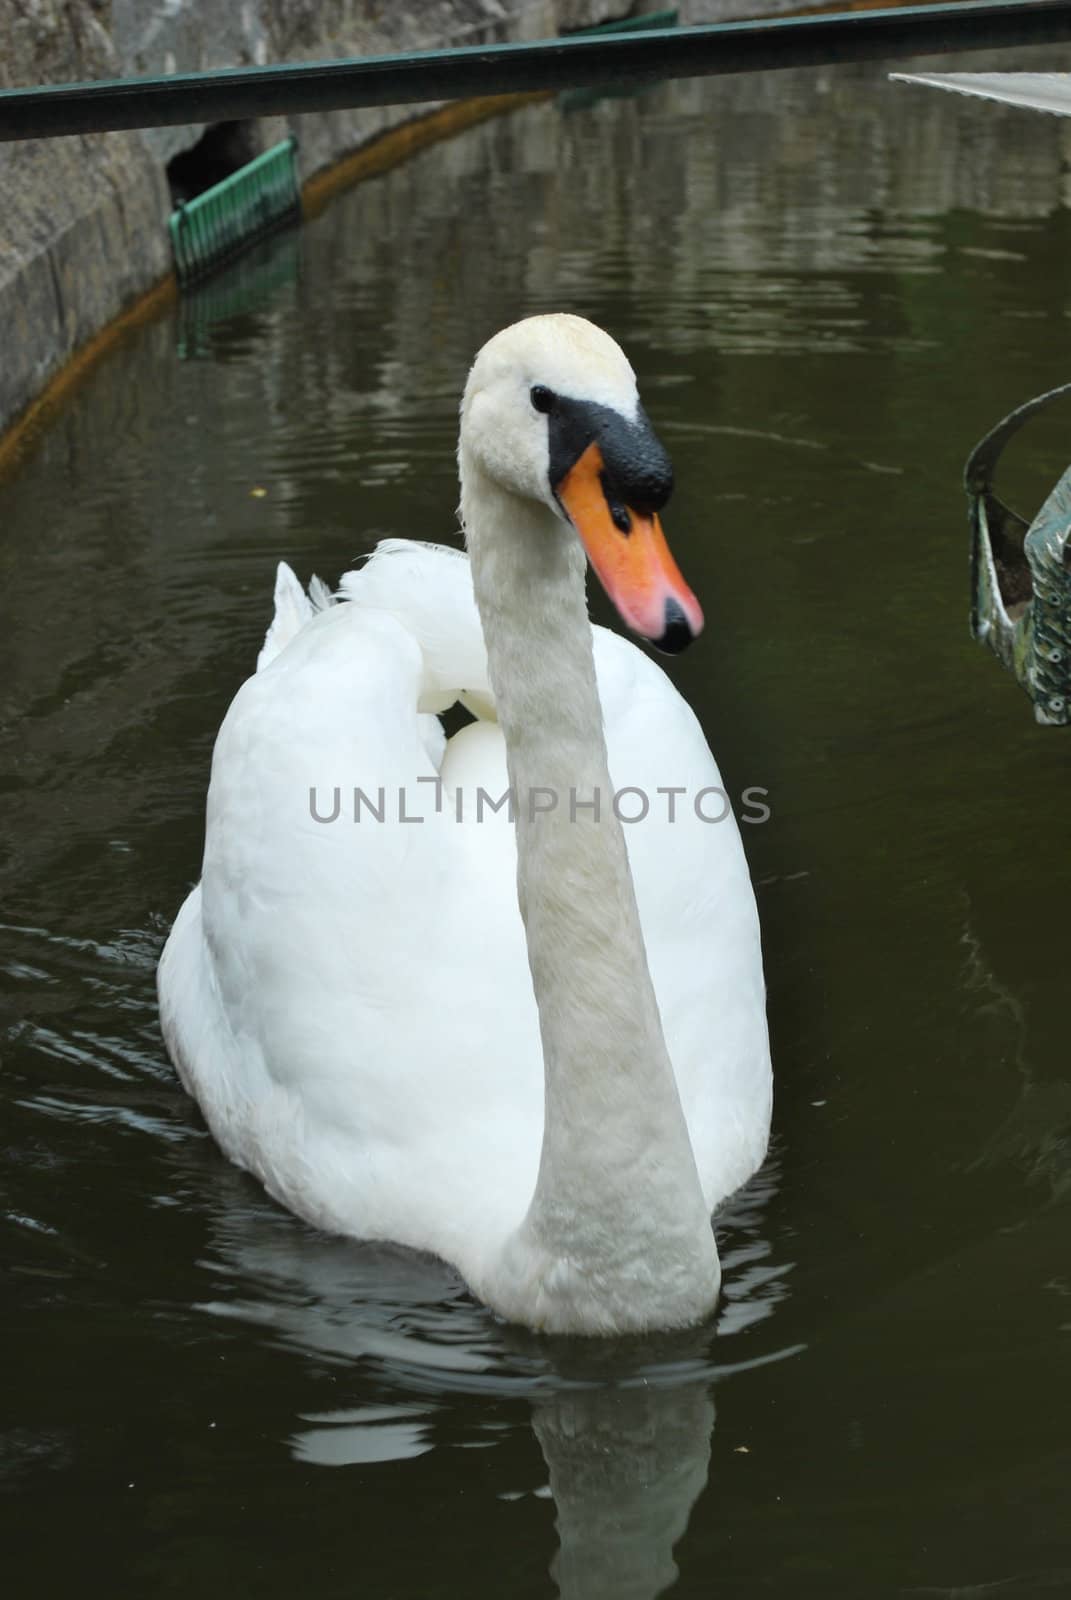 beautiful white swan in a artificial lake